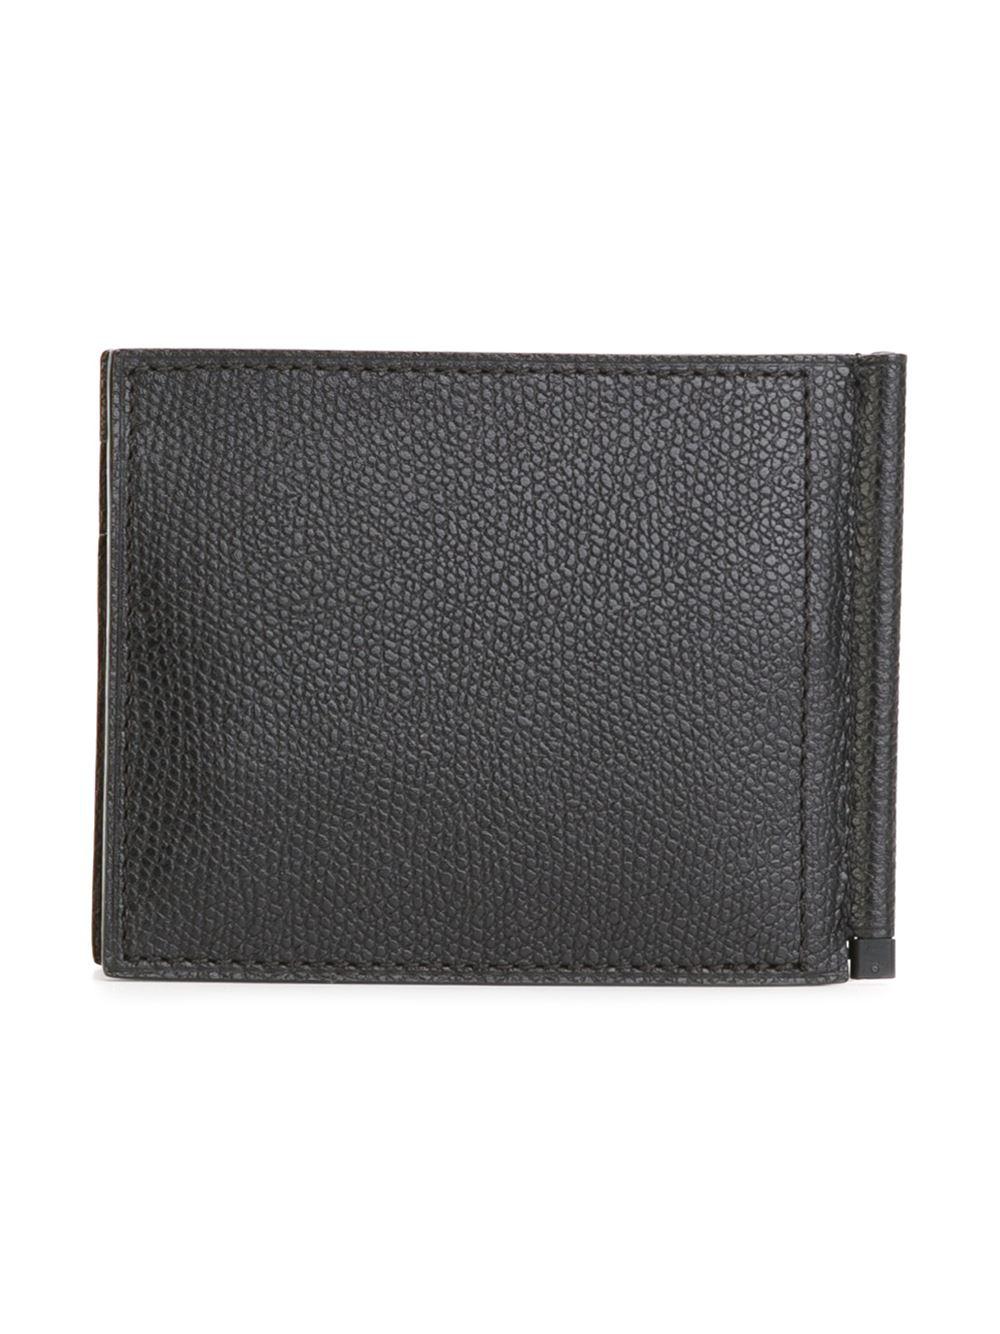 Valextra Leather Billfold Wallet in Black for Men - Lyst